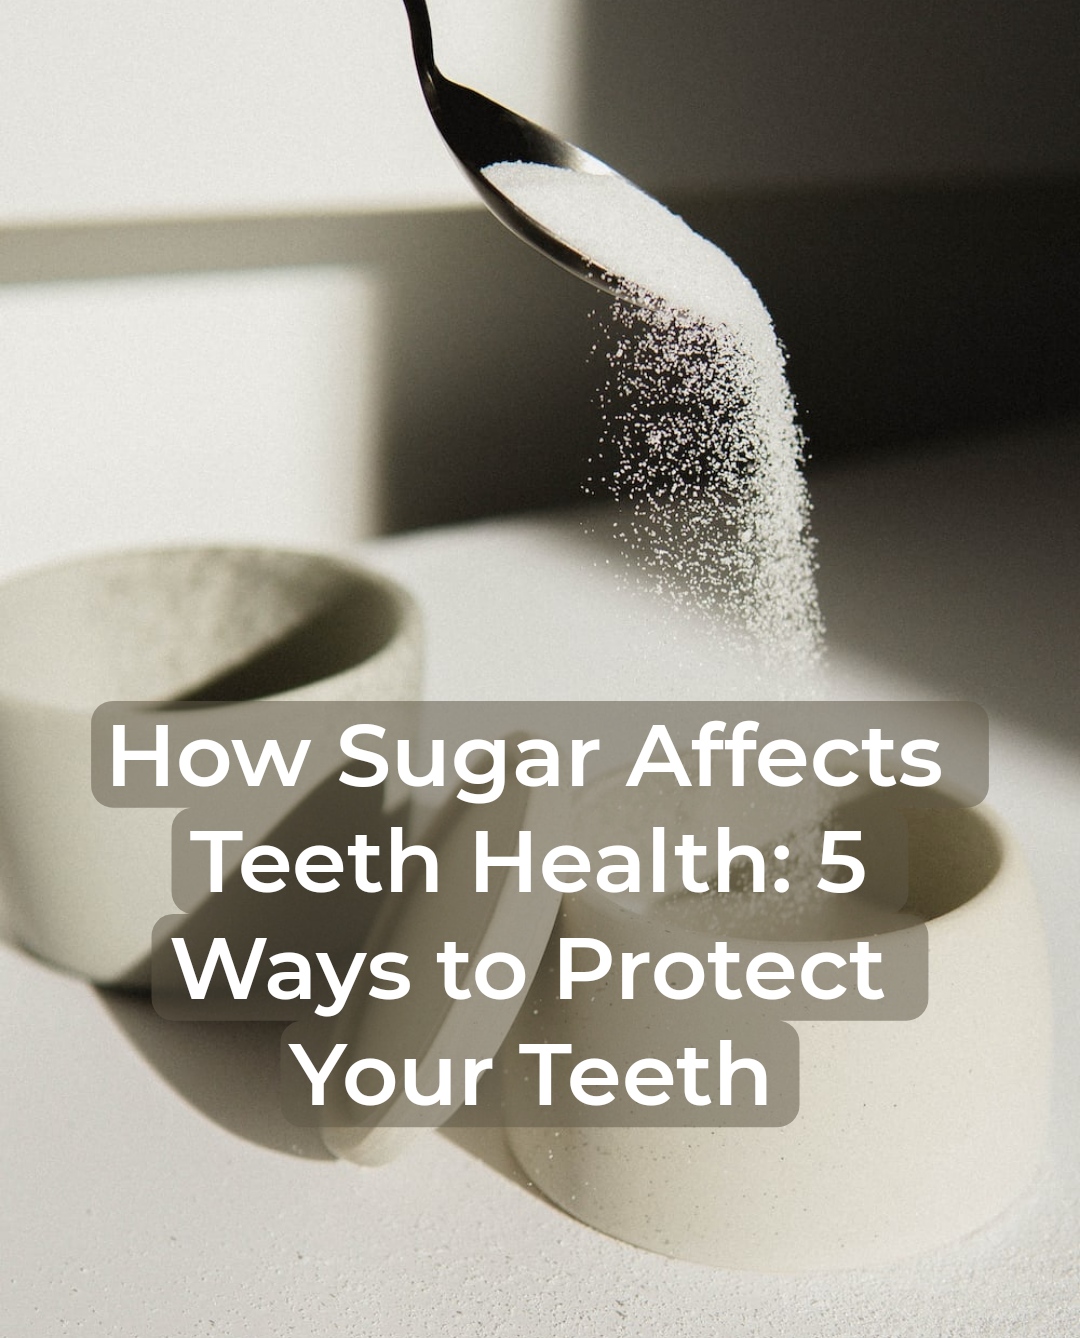 How Sugar Affects Teeth Health: 5 Ways to Protect Your Teeth